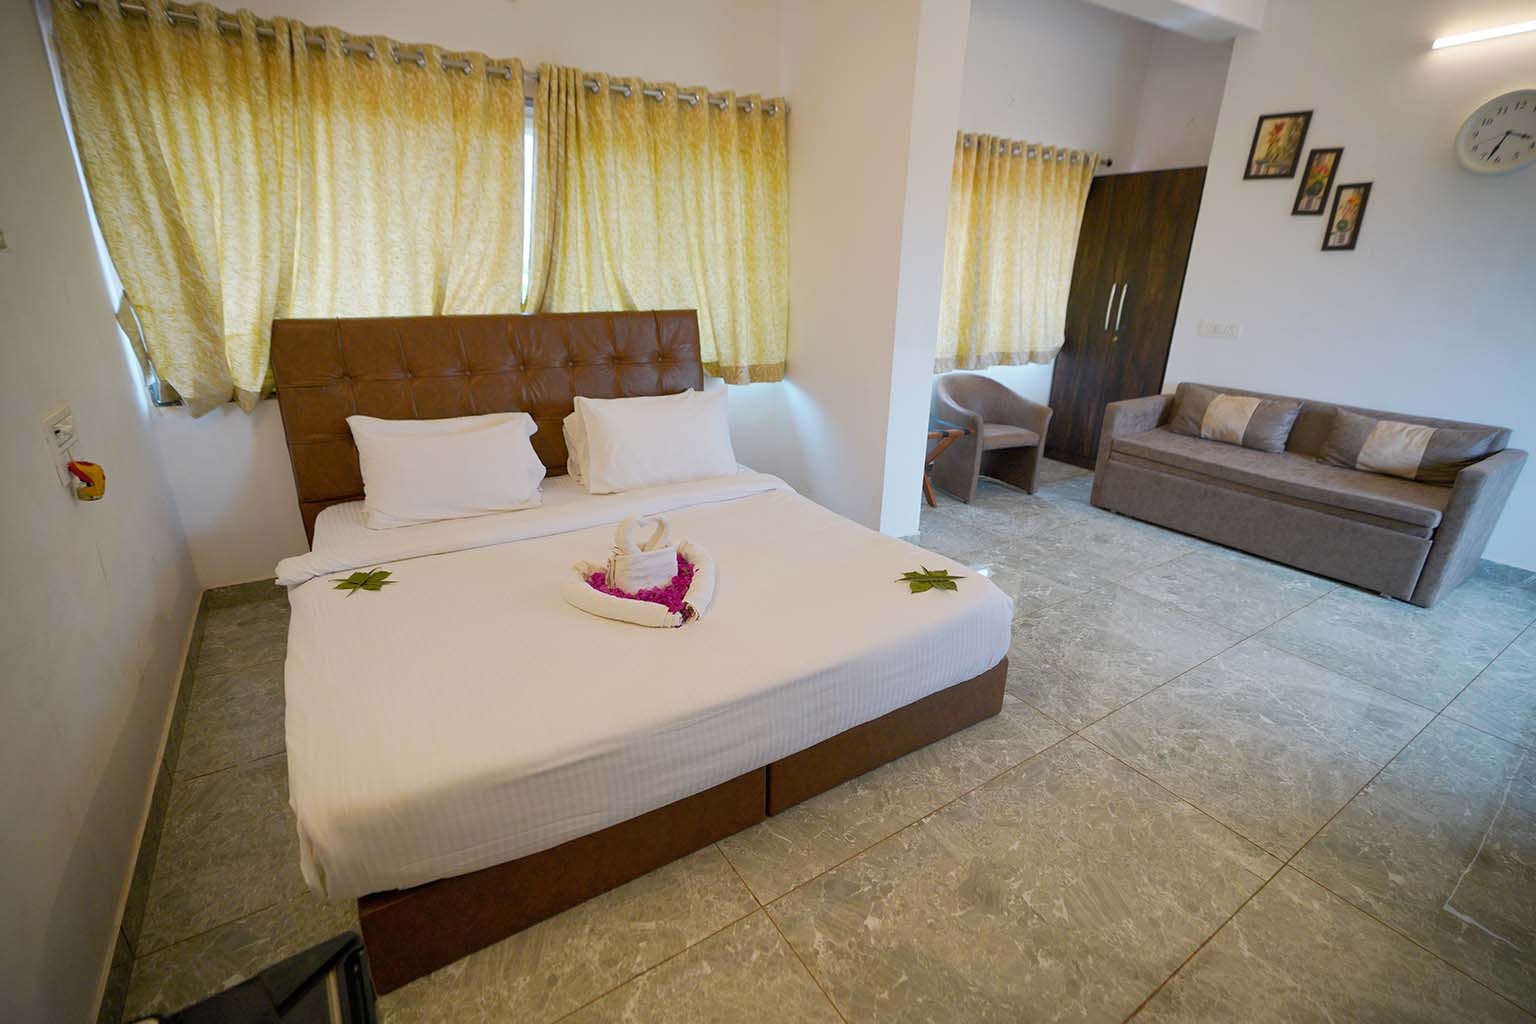 Best Stay resorts in Bidar